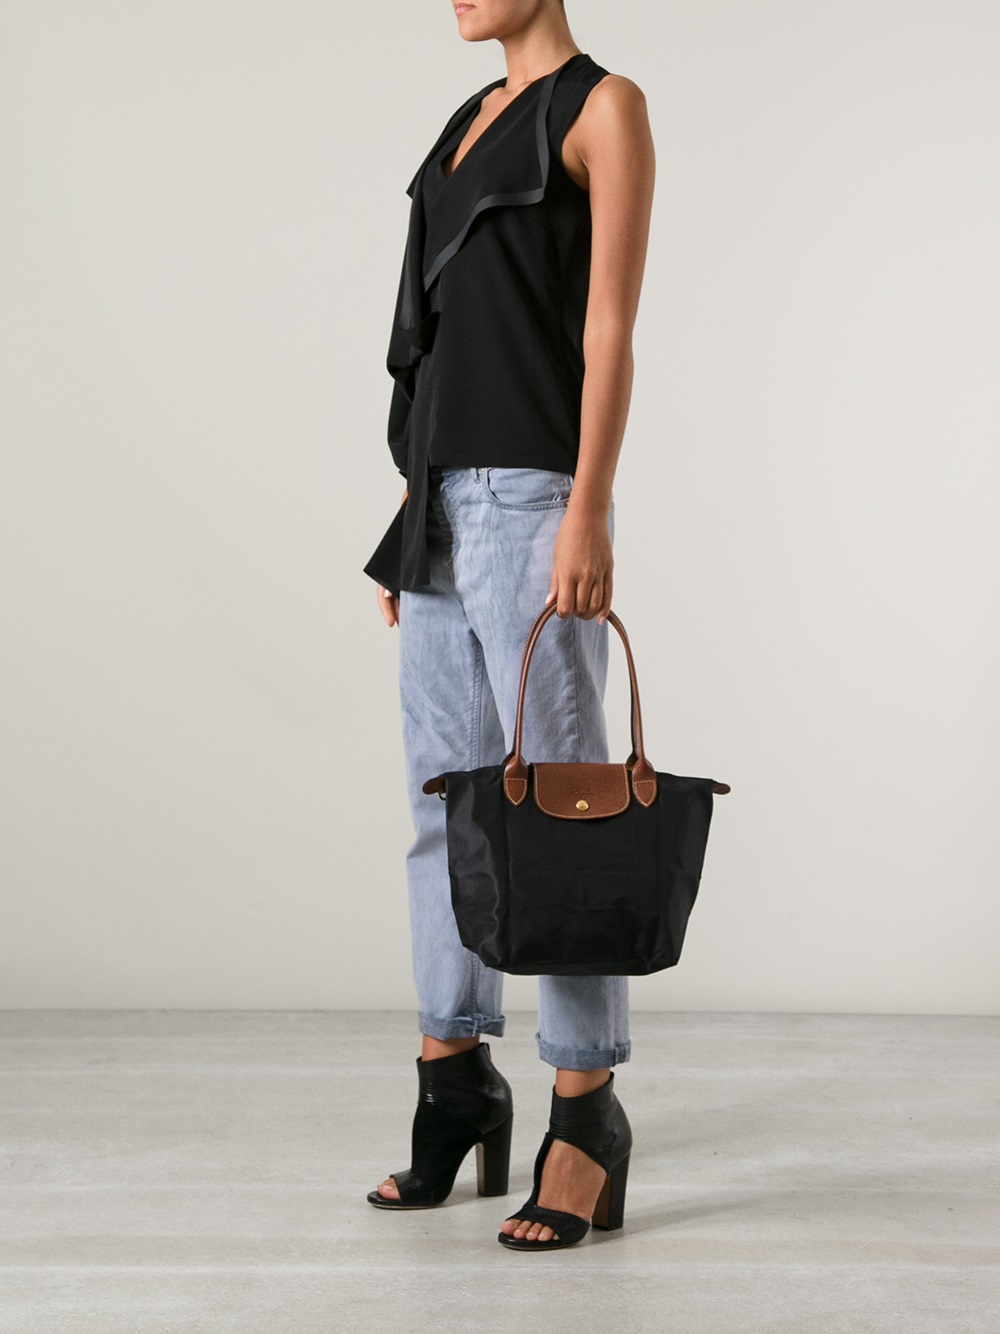 Longchamp Black Small Le Pliage Original Tote Bag Harrods UK | soldamaq ...